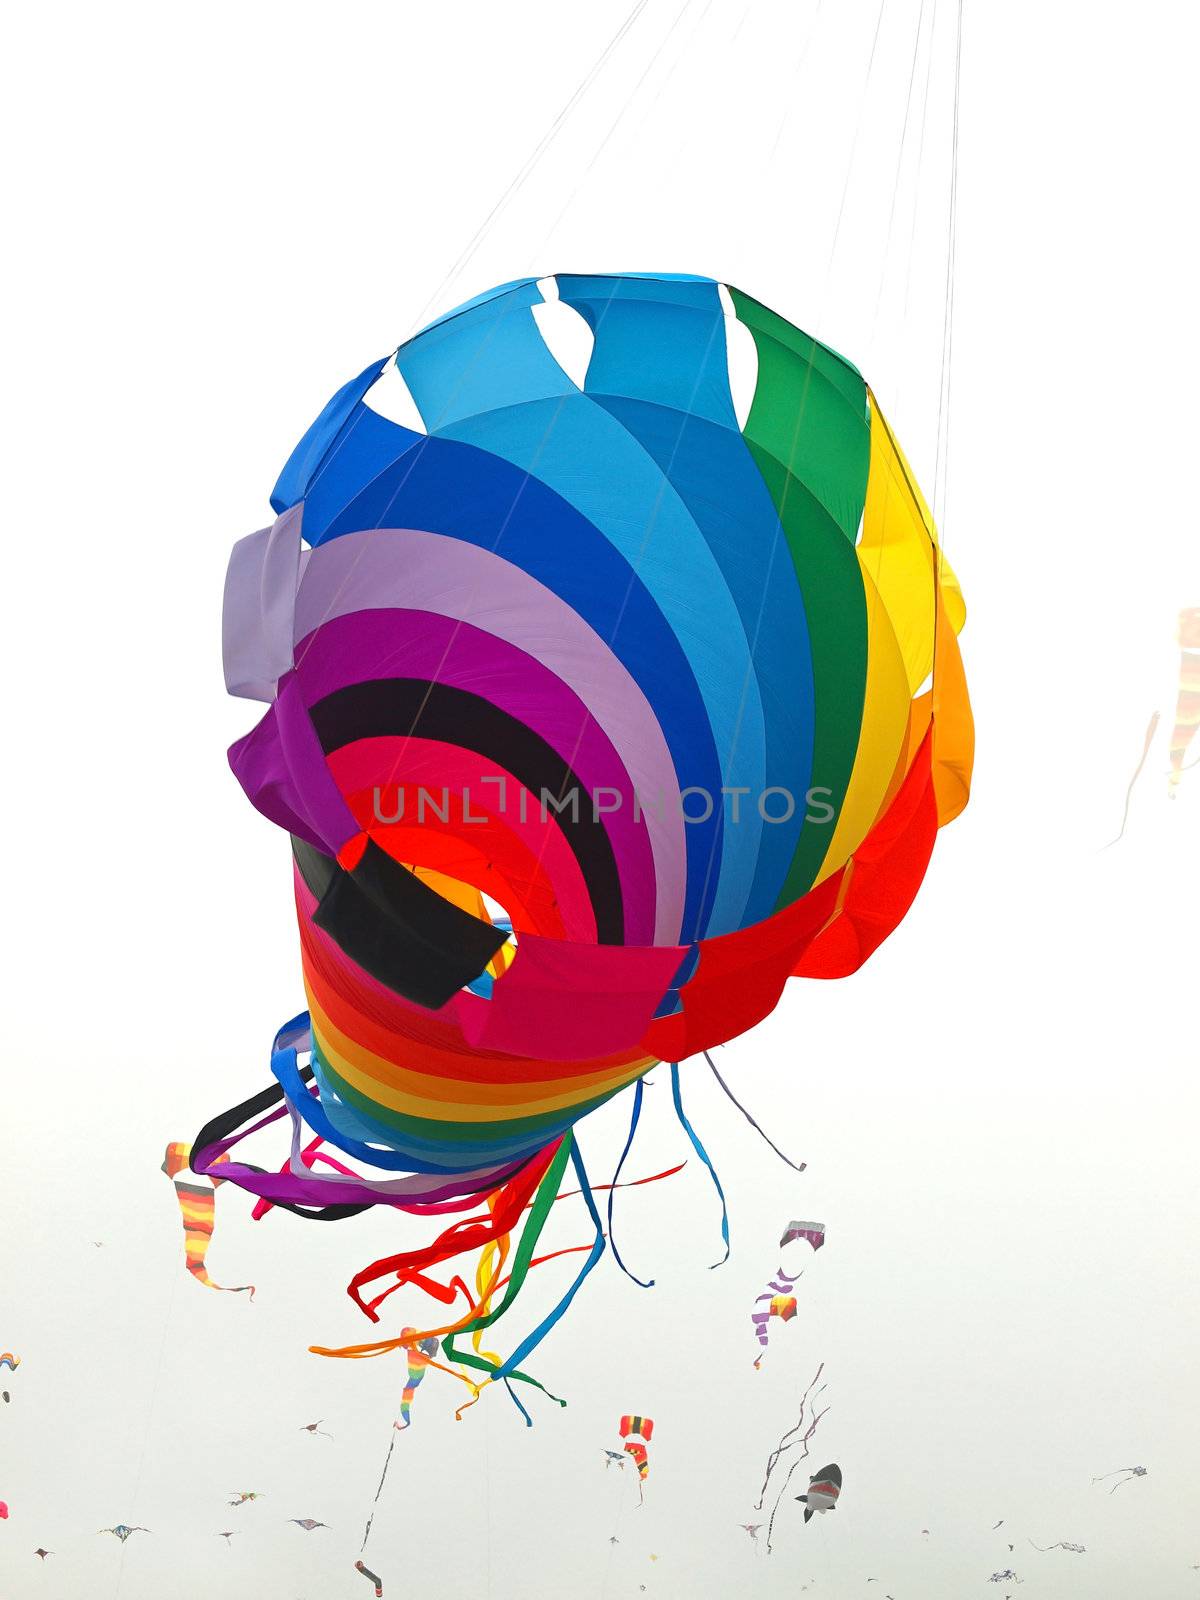 Rainbow Colored Tube Kite Flying by Frankljunior